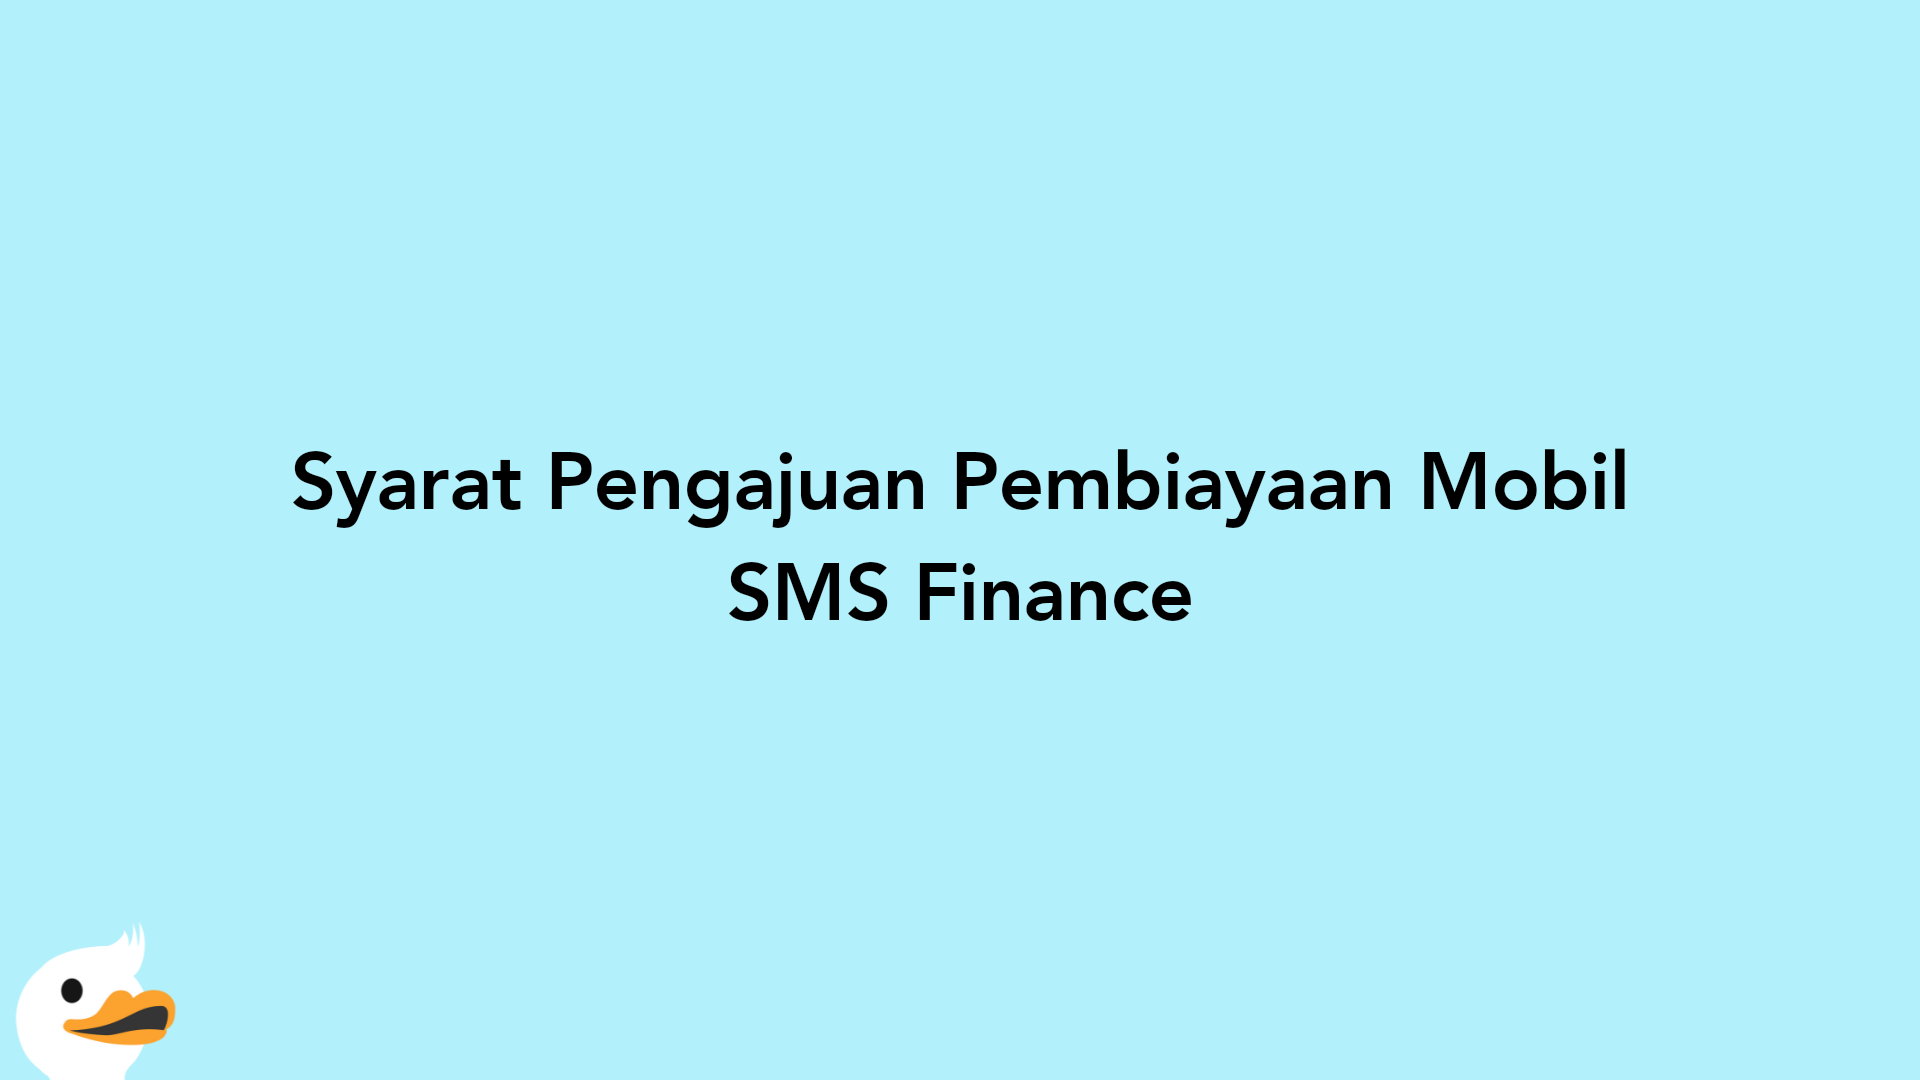 Syarat Pengajuan Pembiayaan Mobil SMS Finance